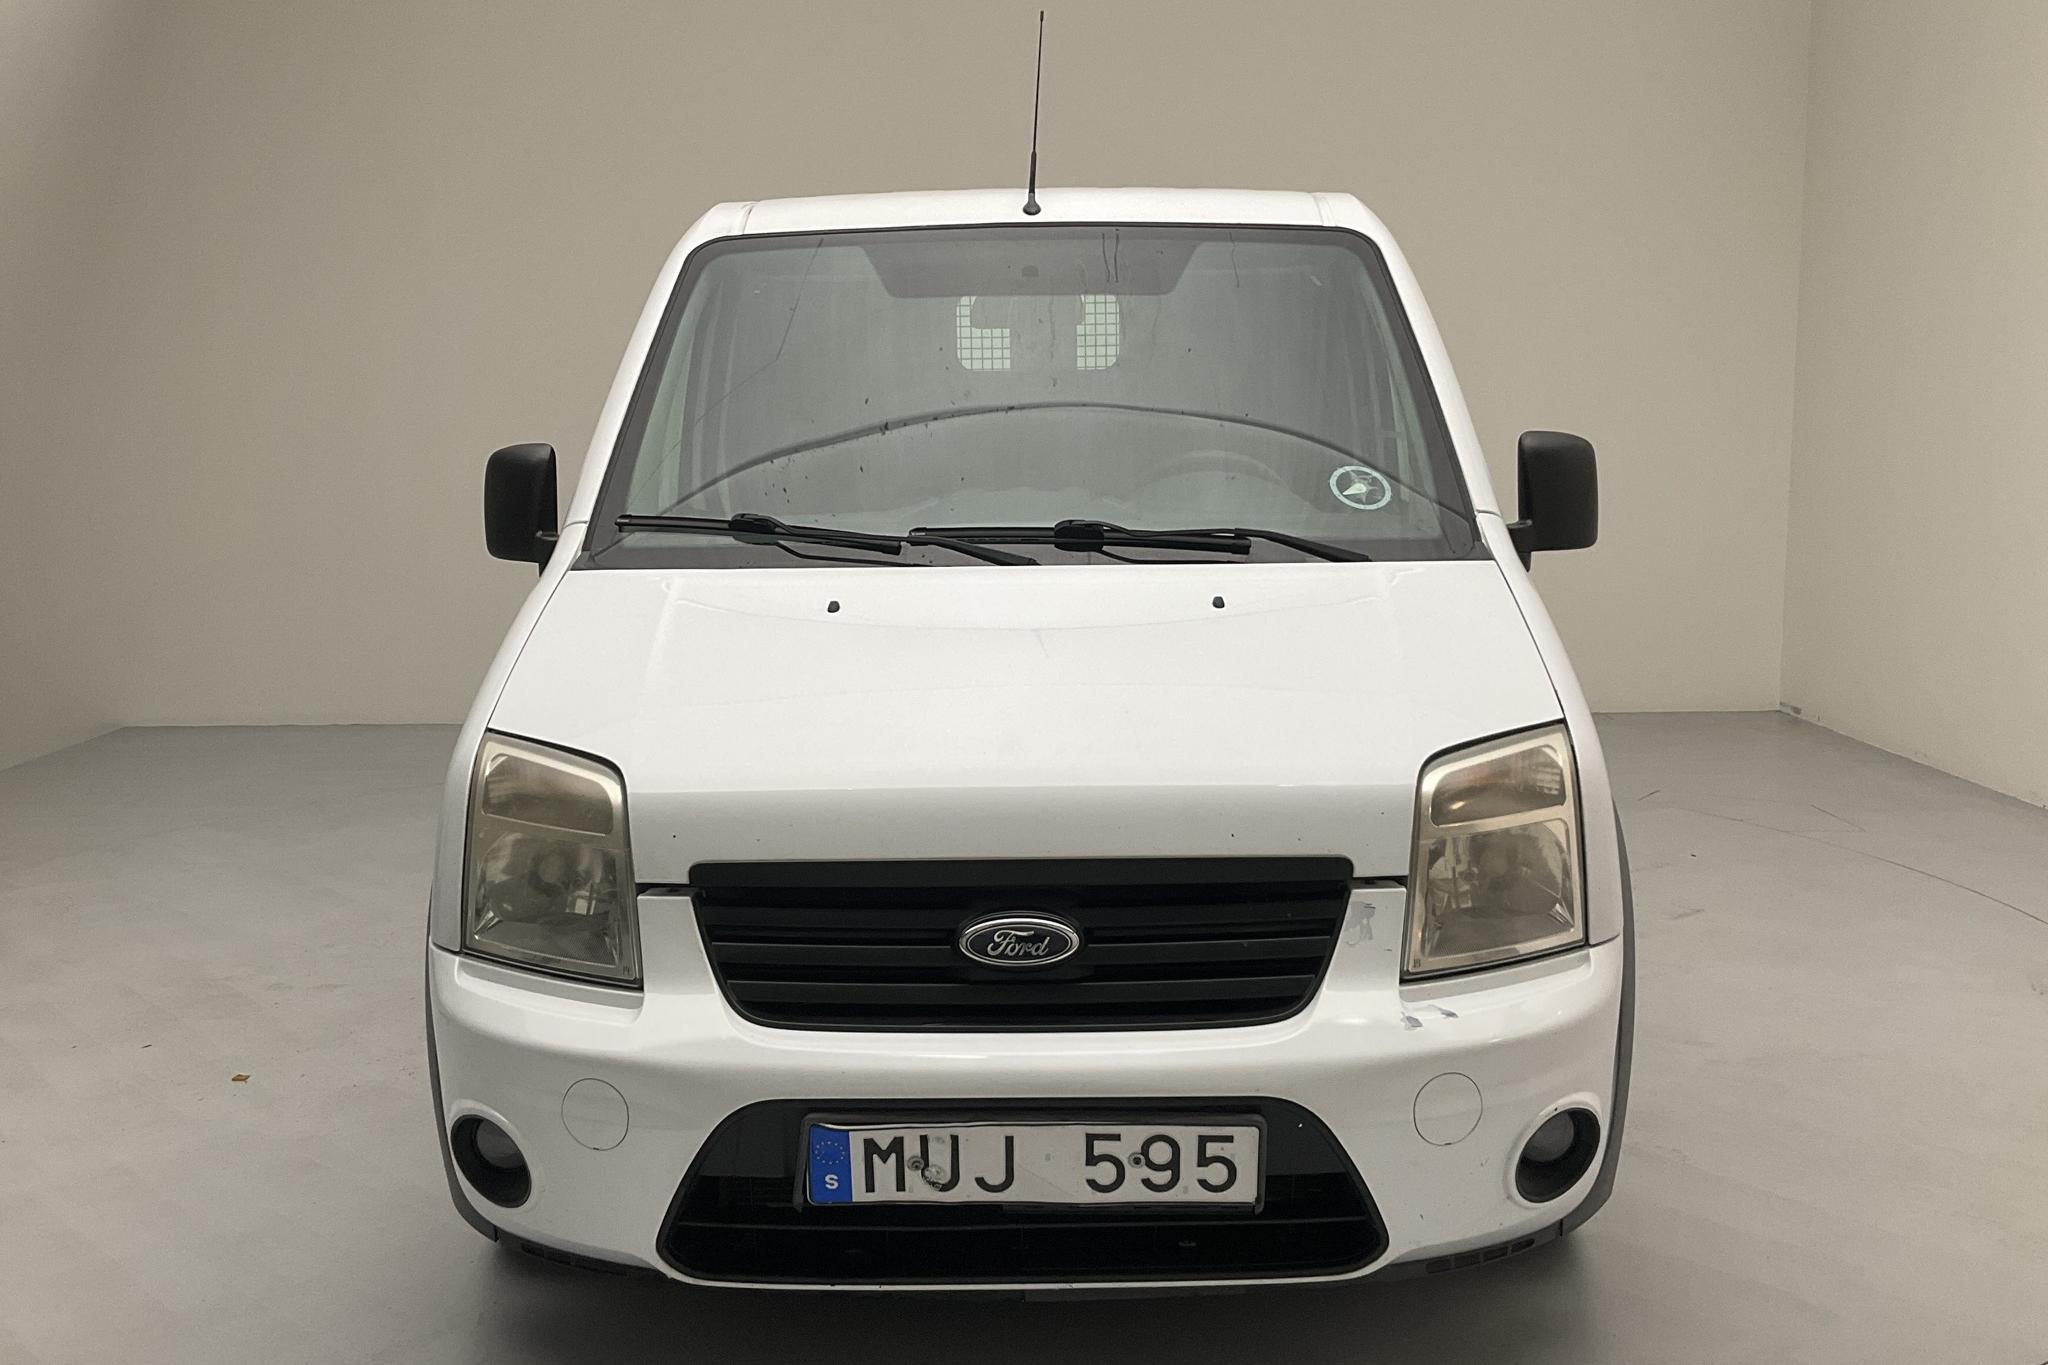 Ford Transit Connect 1.8 TDCi (90hk) - 98 310 km - Manual - white - 2012